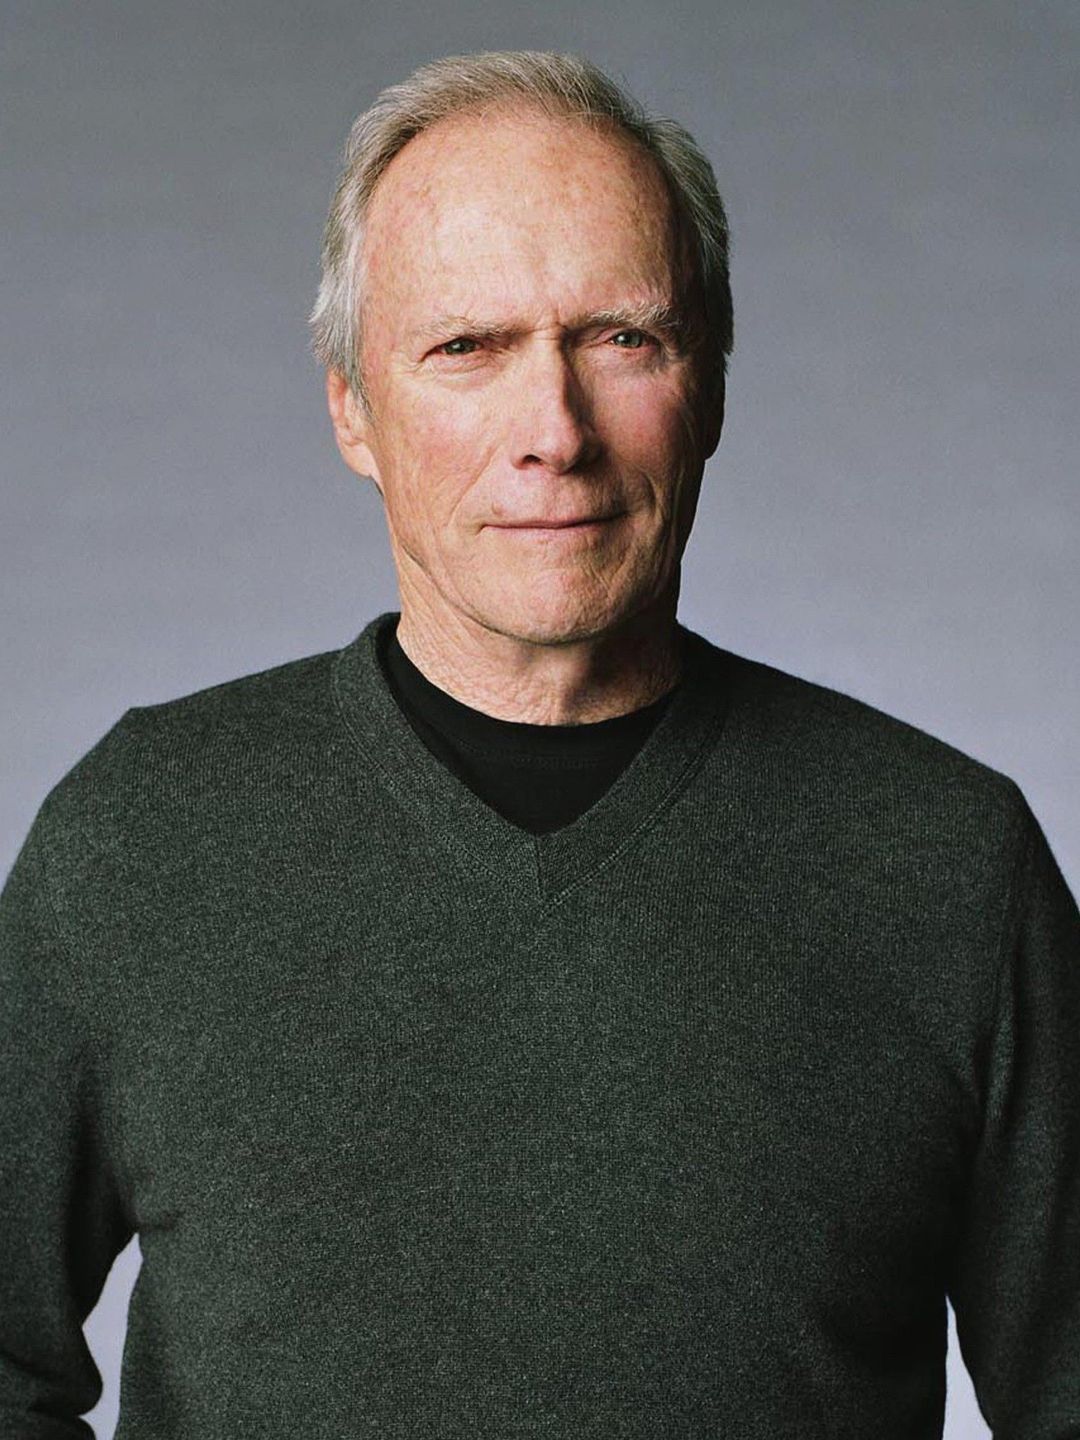 Clint Eastwood current look